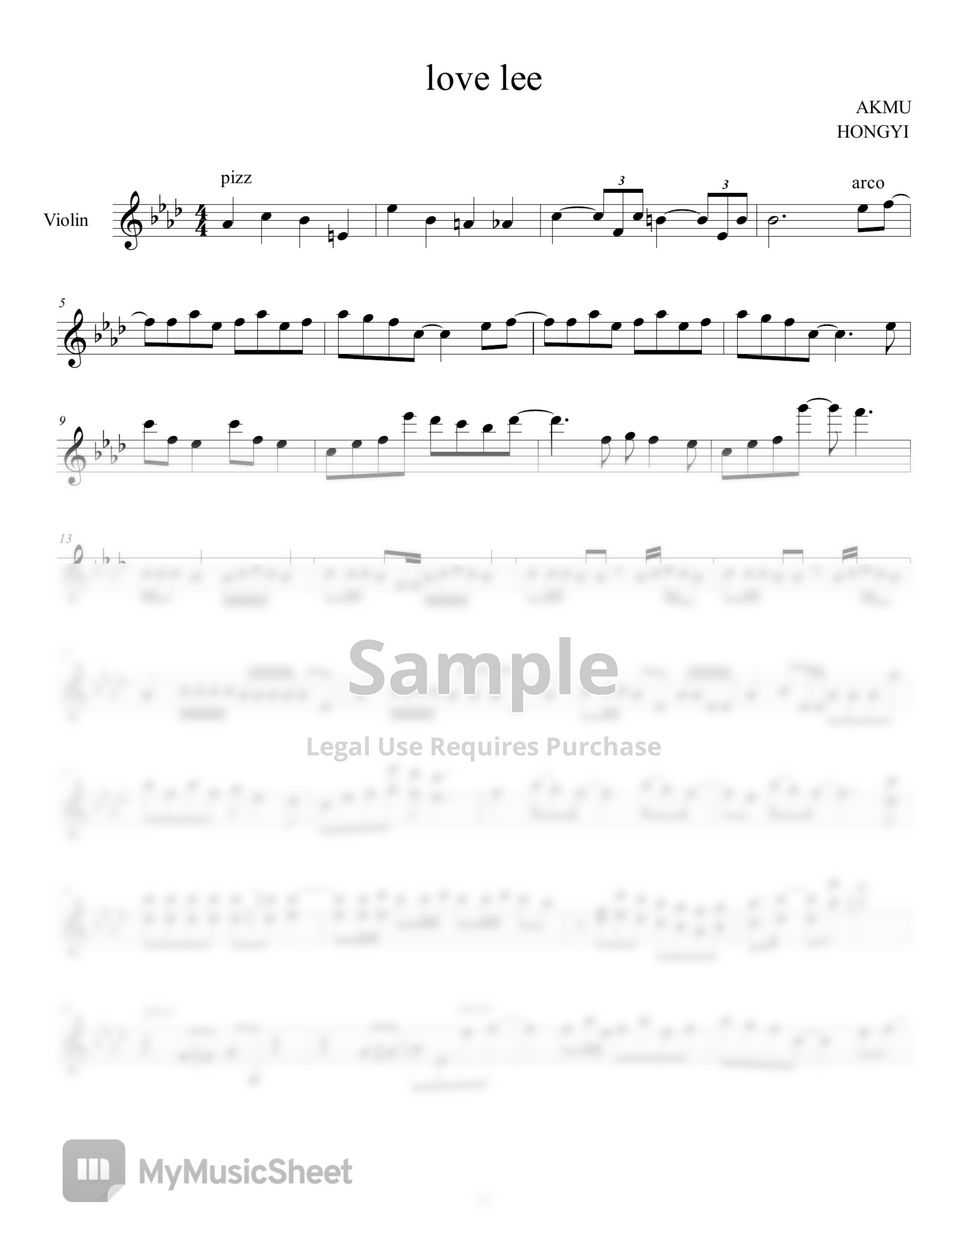 AKMU - Love Lee (solo violin) by HONGYI